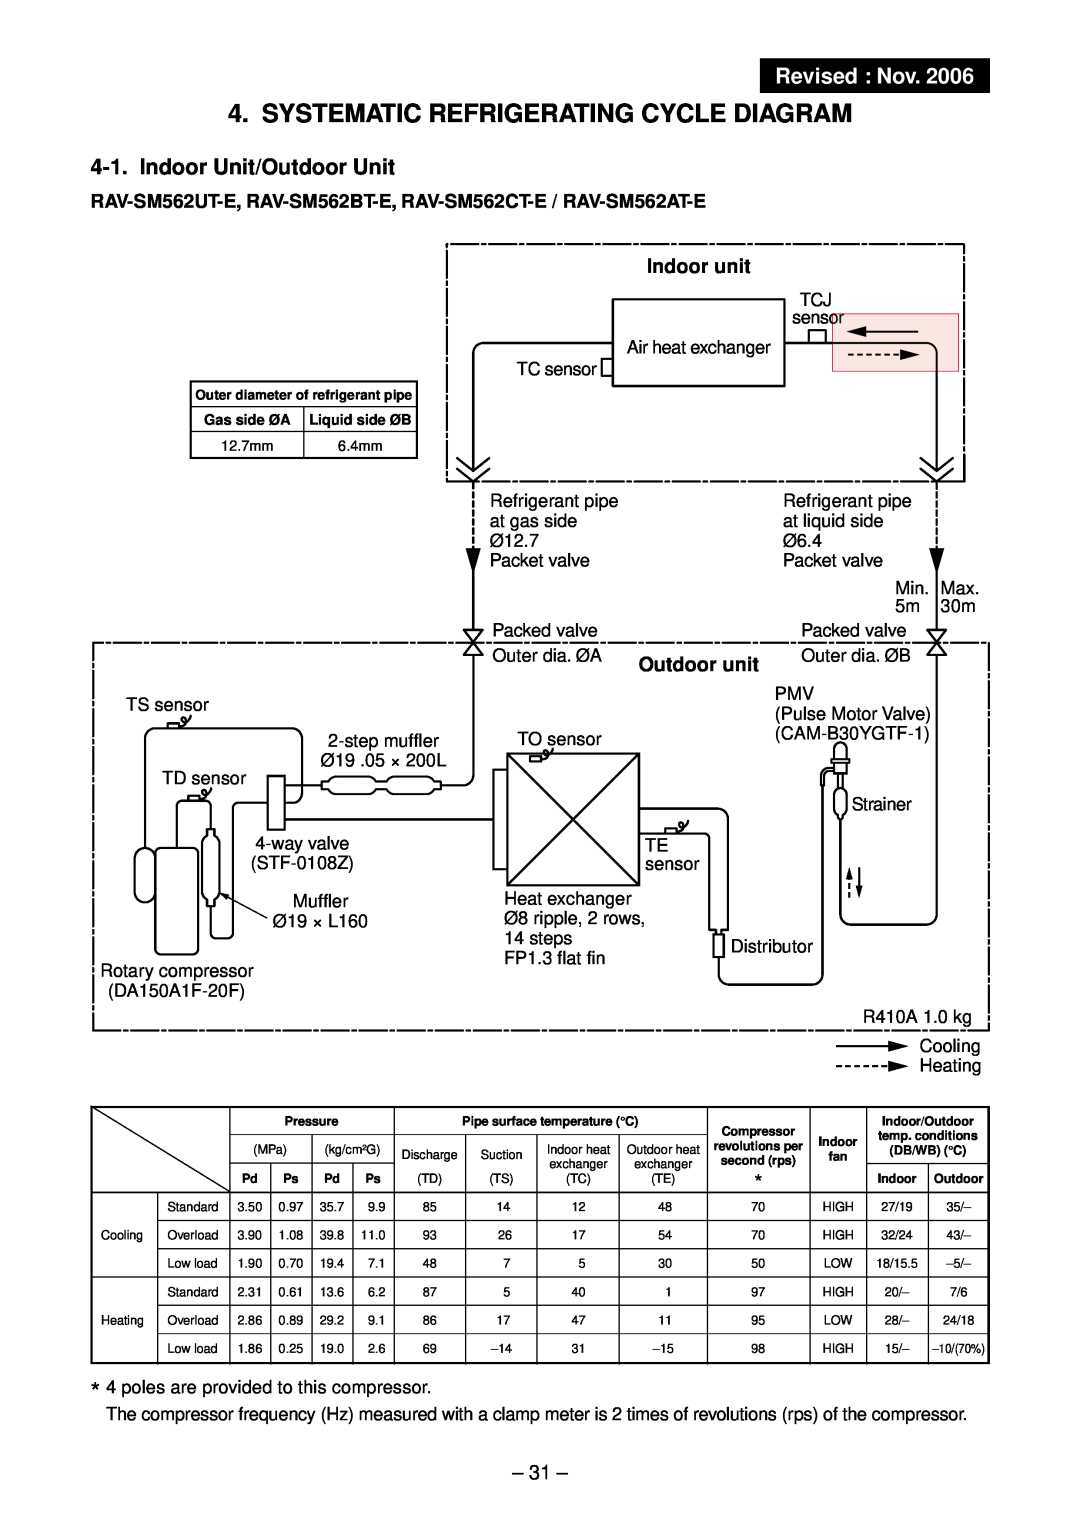 Toshiba RAV-SM562UT-E, RAV-SM1102UT-E Systematic Refrigerating Cycle Diagram, Revised : Nov, Indoor unit, Outdoor unit, 31 